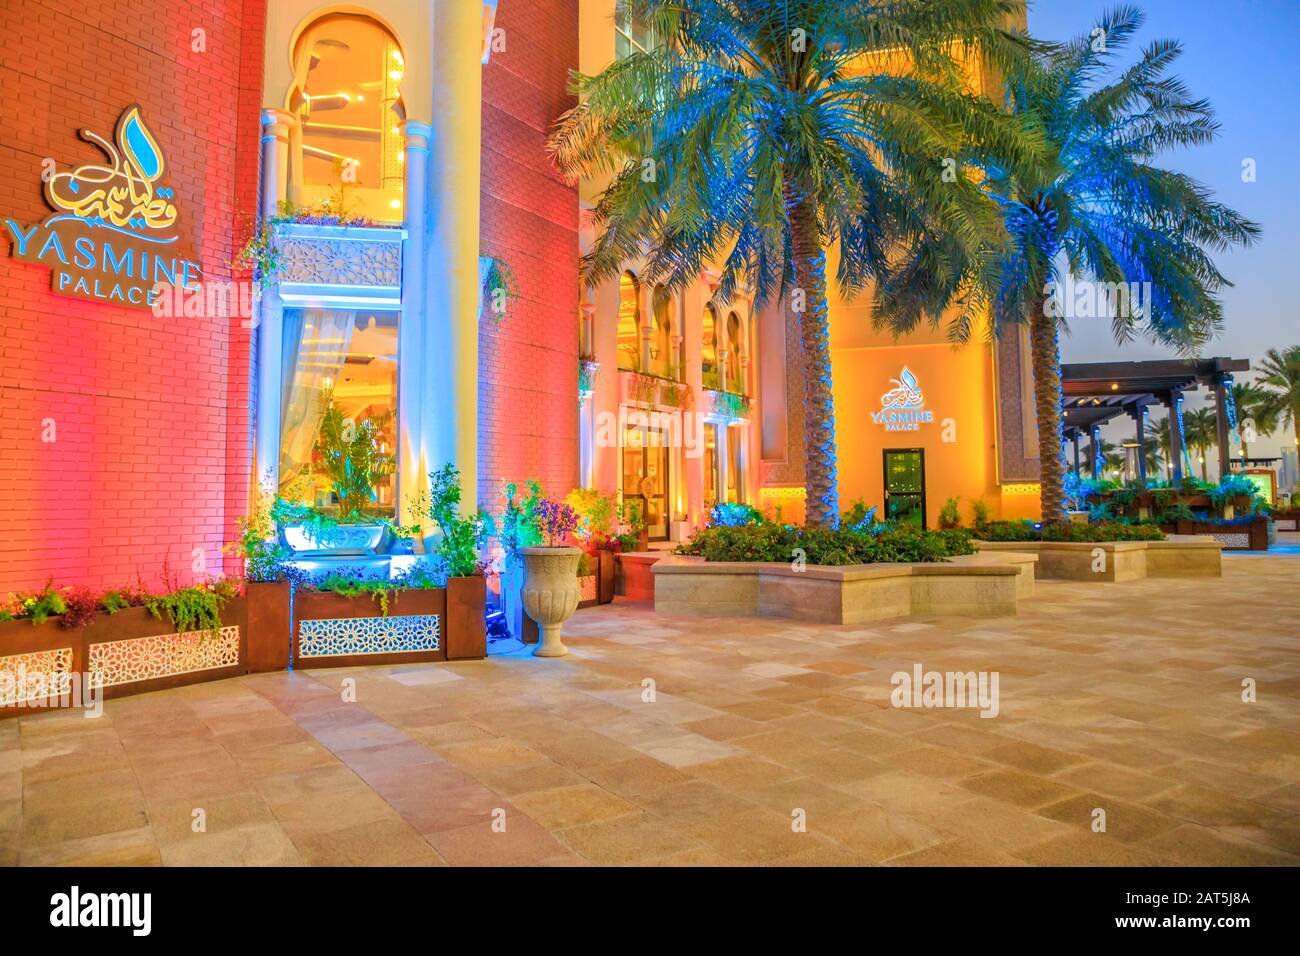 Doha, Qatar - February 18, 2019: entrance of Arab restaurant Yasmine Palace on corniche marina promenade in Porto Arabia at the Pearl-Qatar Stock Photo